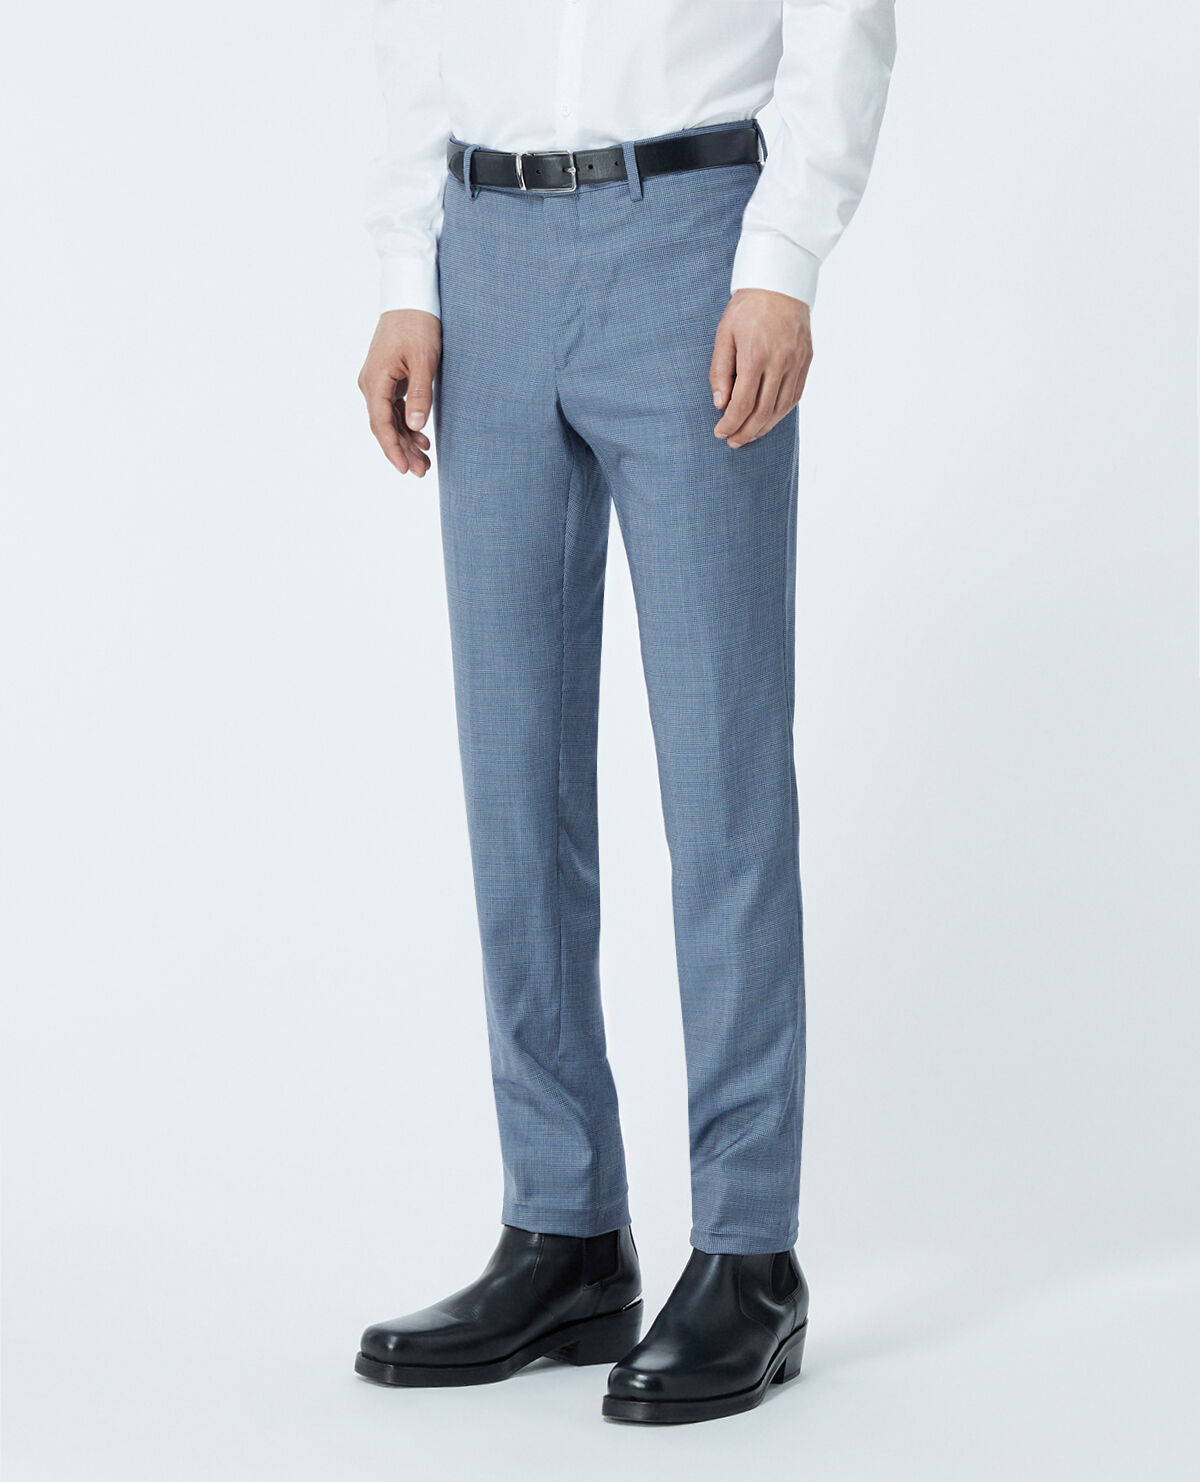 100% Cotton Sky Blue SLIM FIT Full Sleeve Formal Mens Plain Shirt